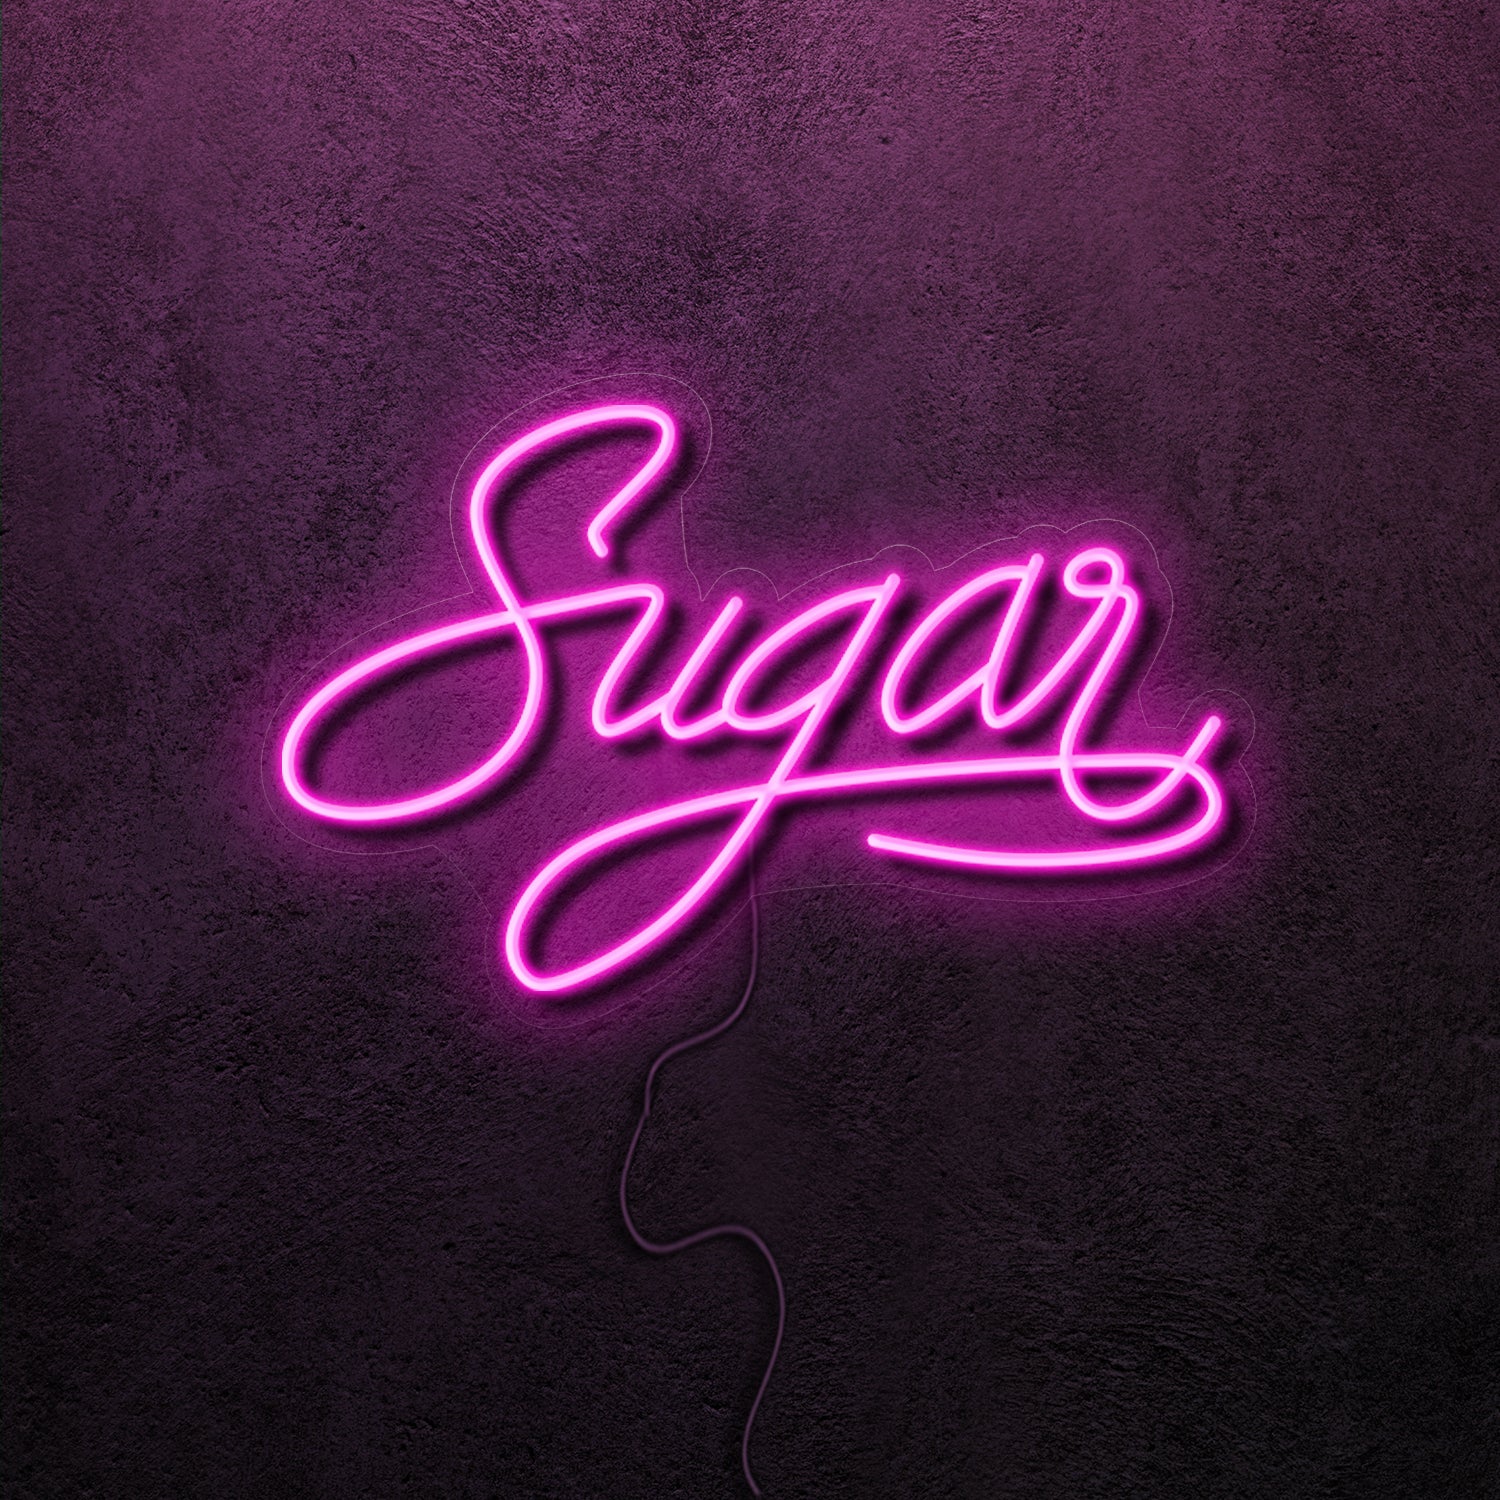 Sugar - neoon.eu